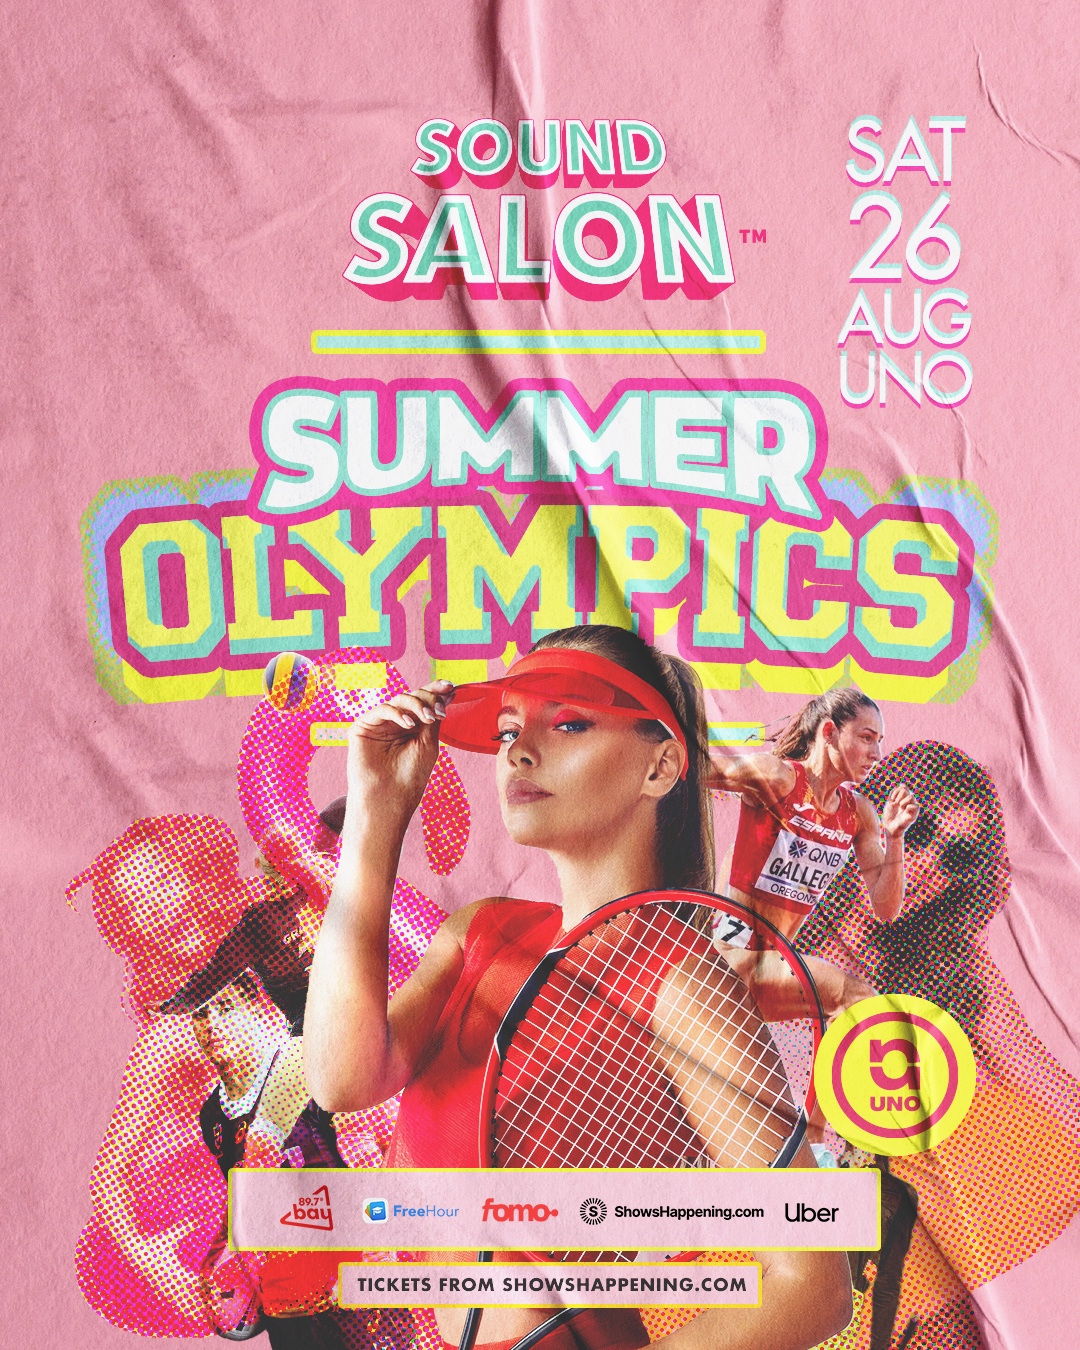 THE SOUND SALON SUMMER OLYMPICS poster